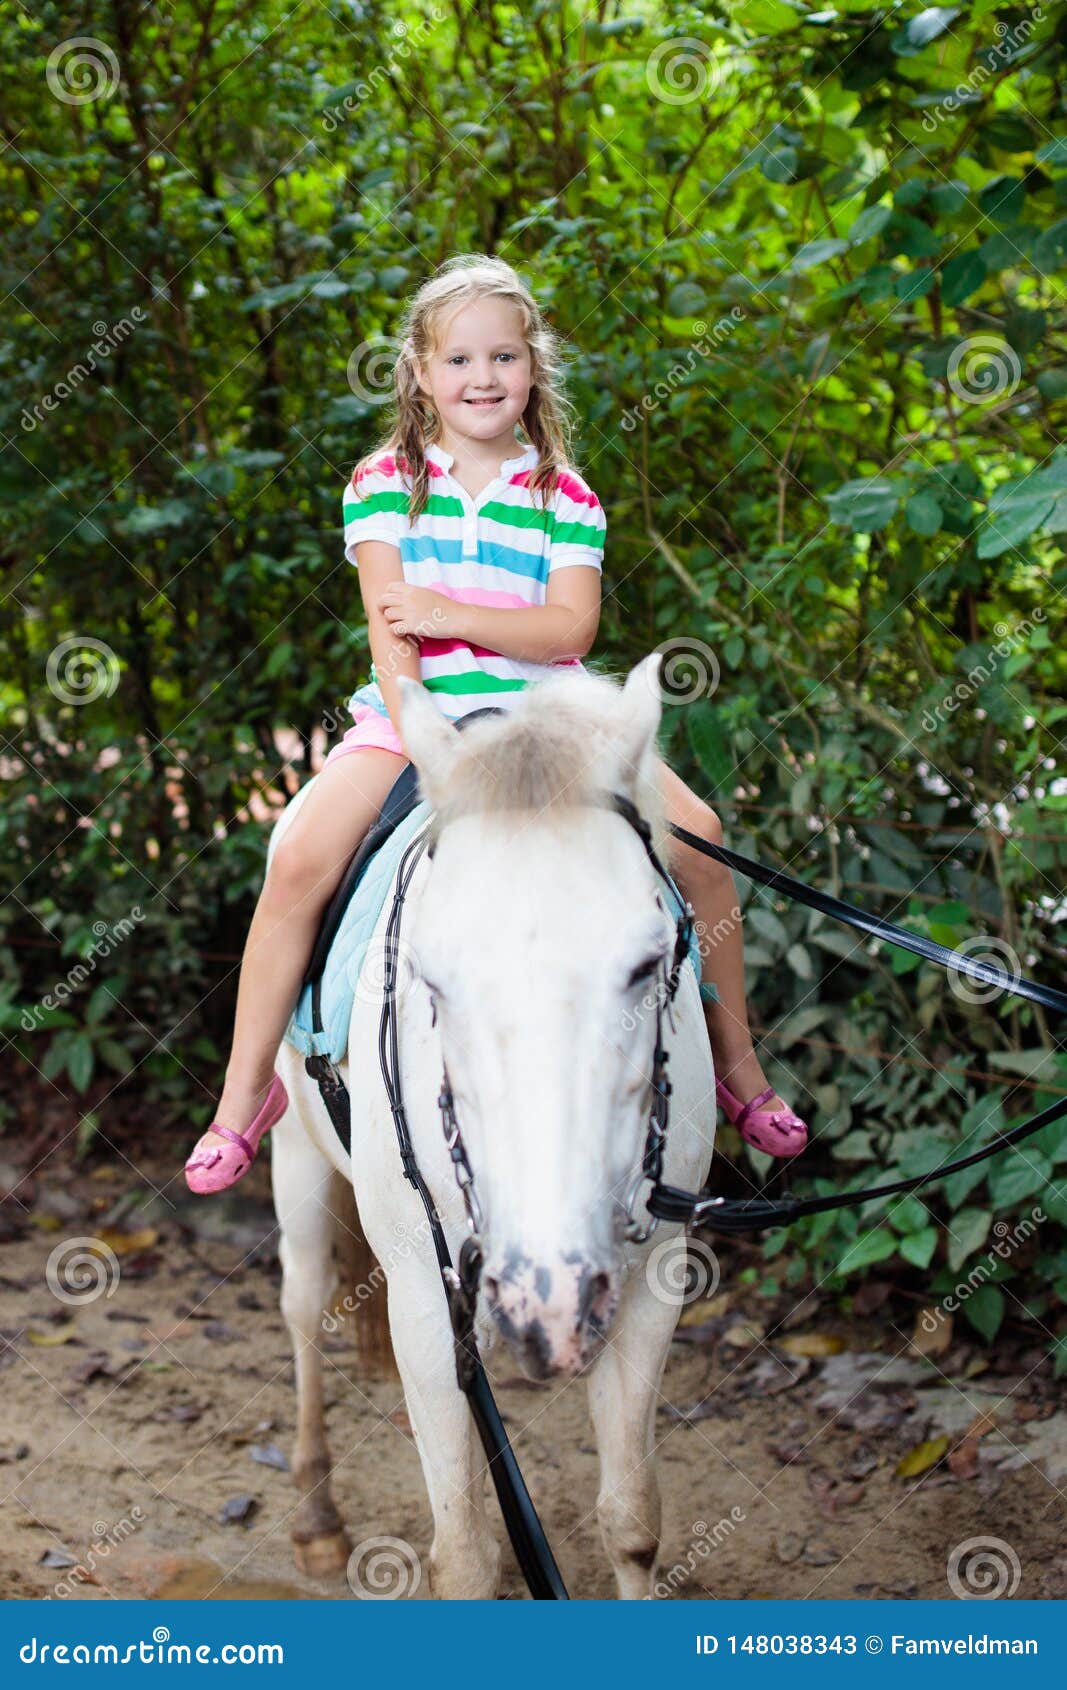 Child Riding Horse. Kids Ride Pony Stock Image - Image of kids, green:  148038343